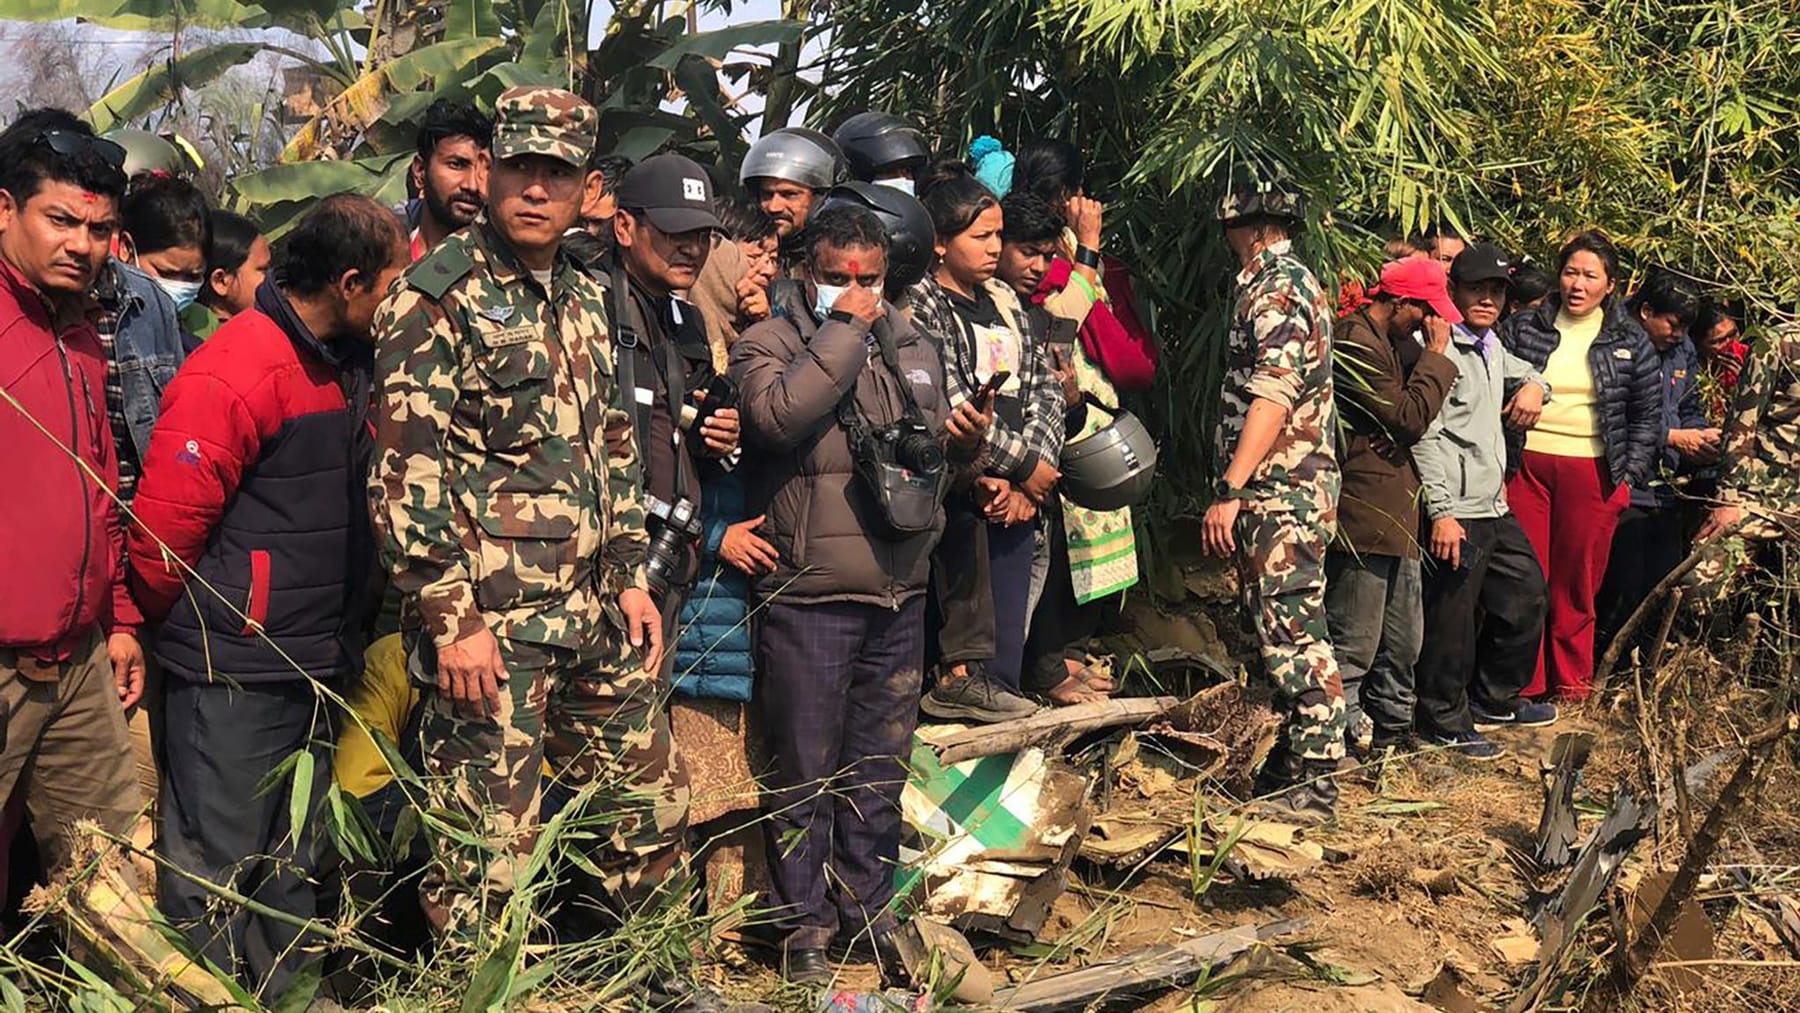 Un avión de pasajeros se estrelló en Nepal: había 72 personas a bordo